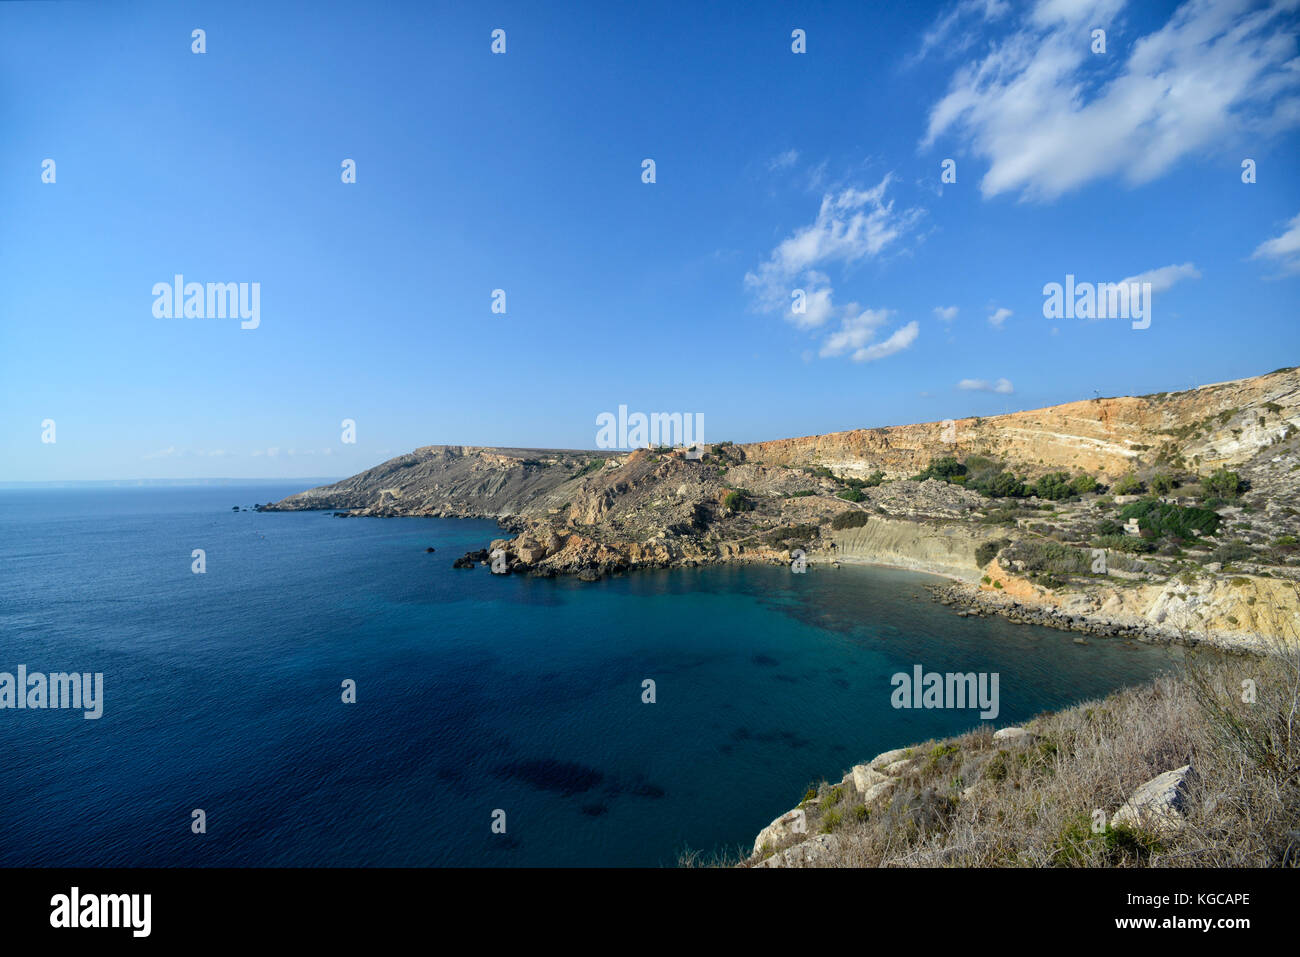 Scenic view of Fomm Ir rih Bay, in Malta Stock Photo